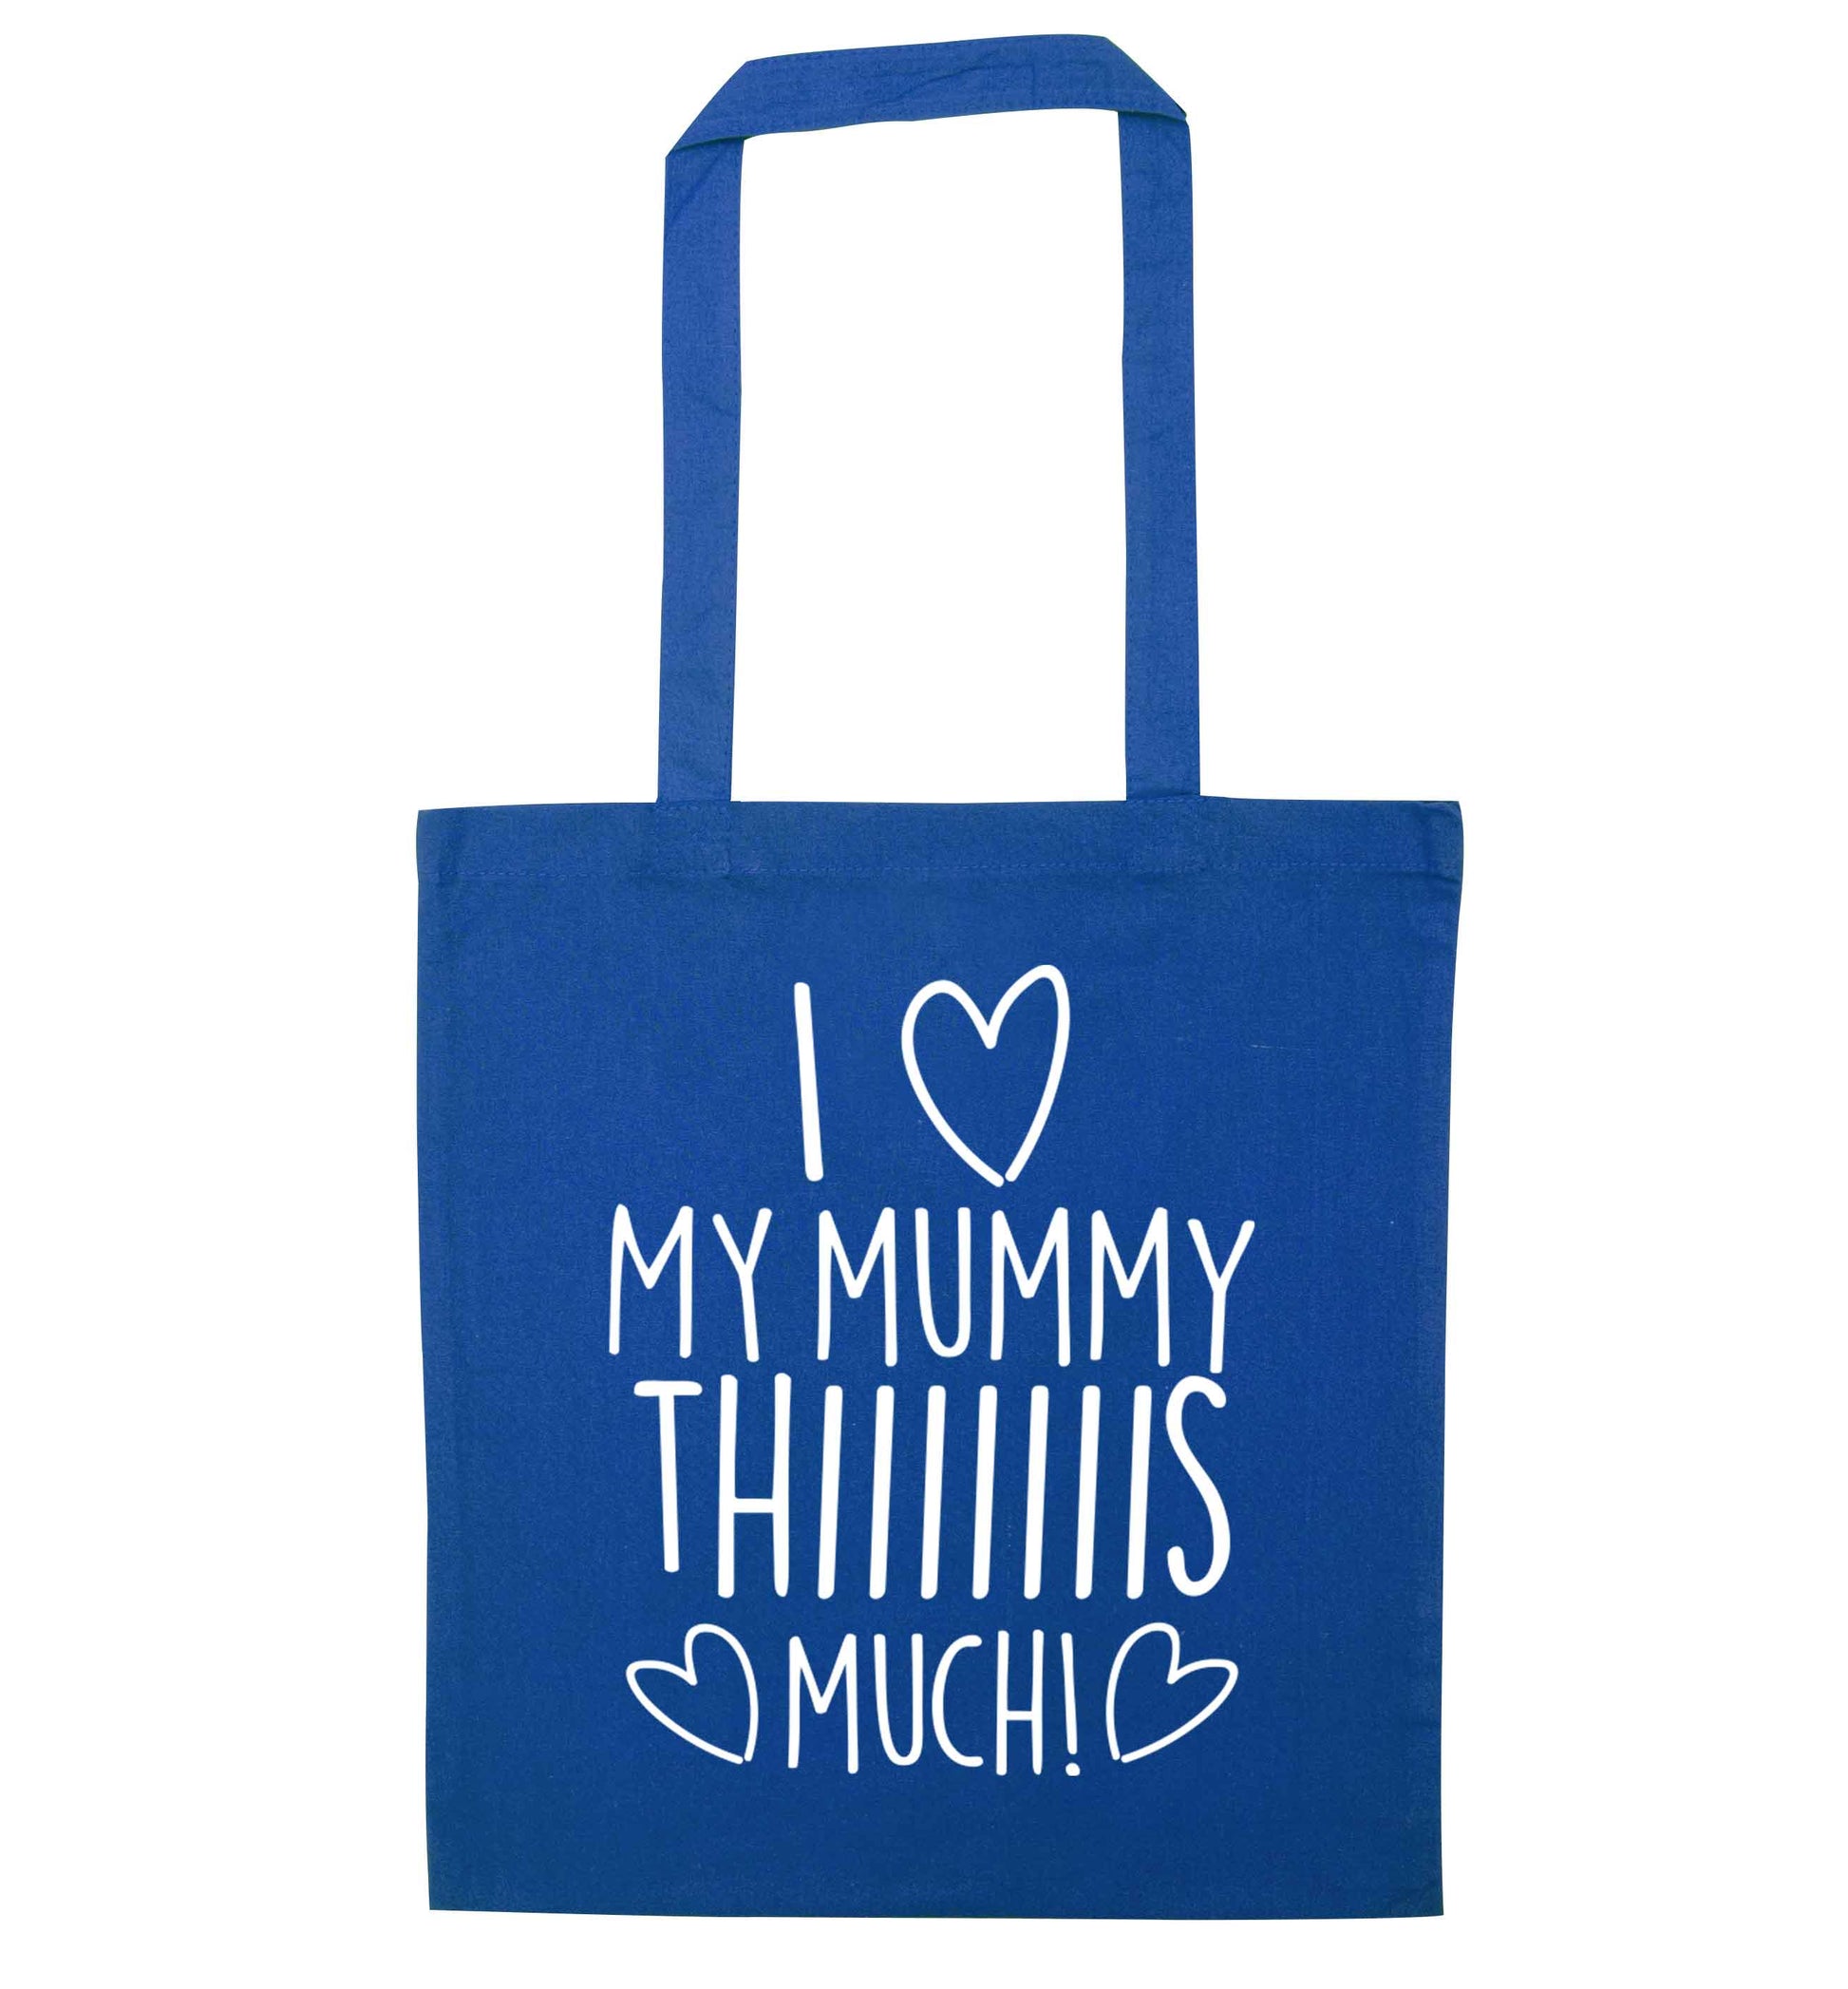 I love my mummy thiiiiis much! blue tote bag